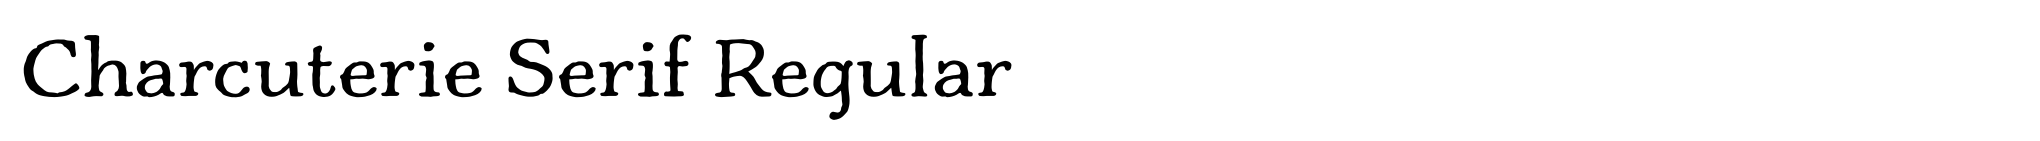 Charcuterie Serif Regular image